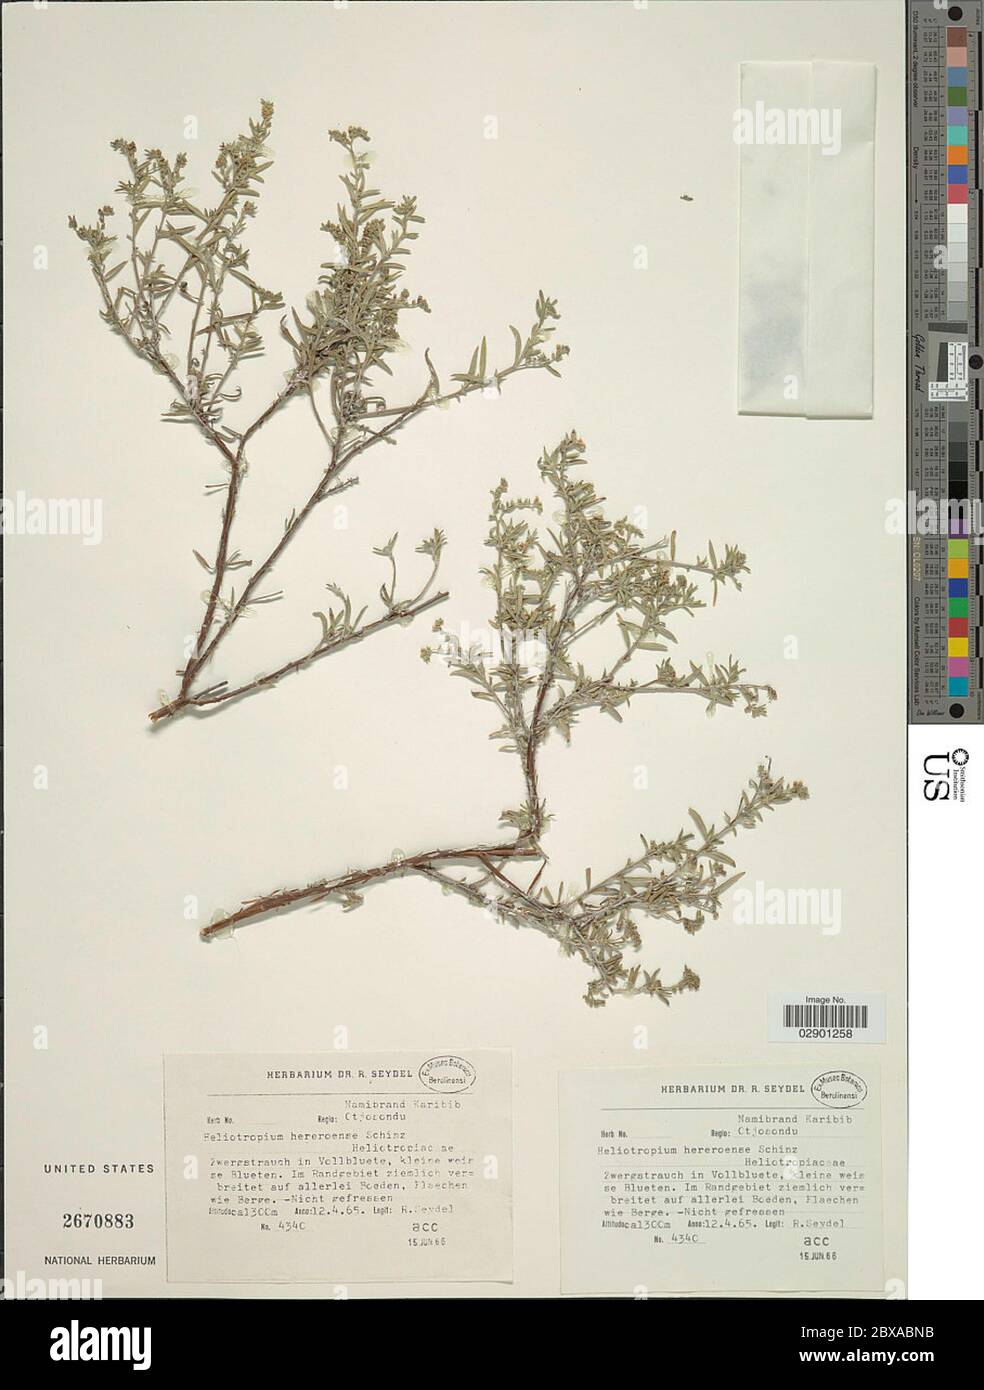 Heliotropium hereroense Schinz Heliotropium hereroense Schinz. Stock Photo